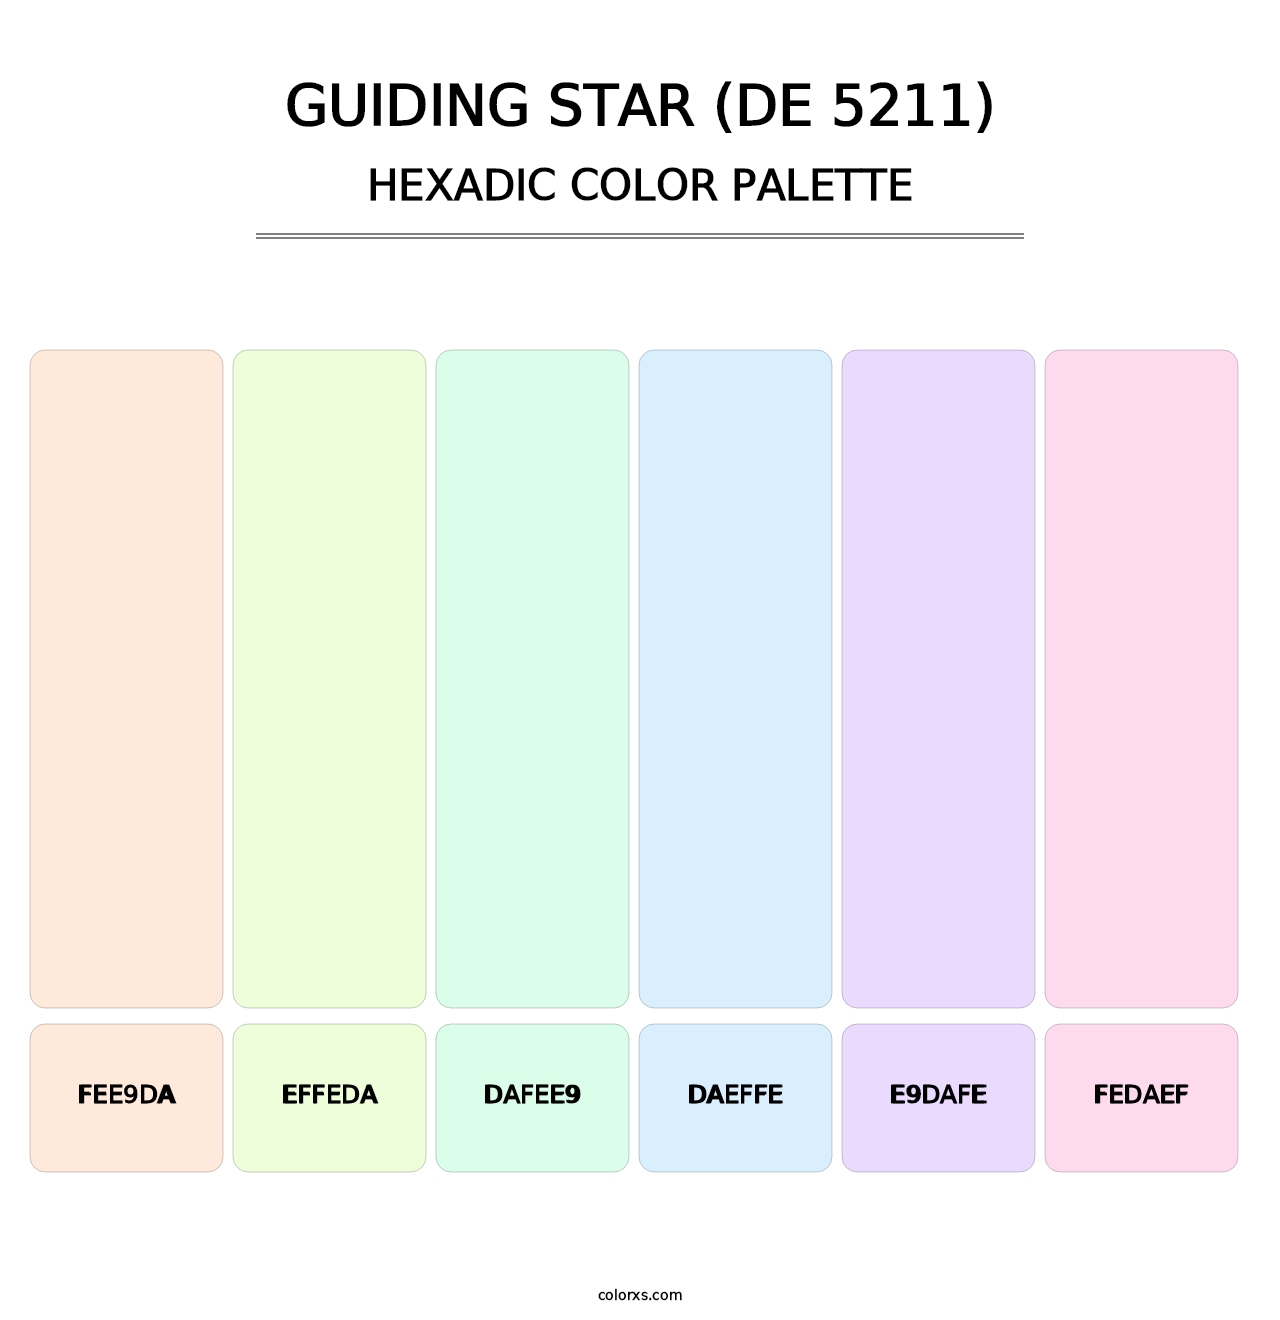 Guiding Star (DE 5211) - Hexadic Color Palette